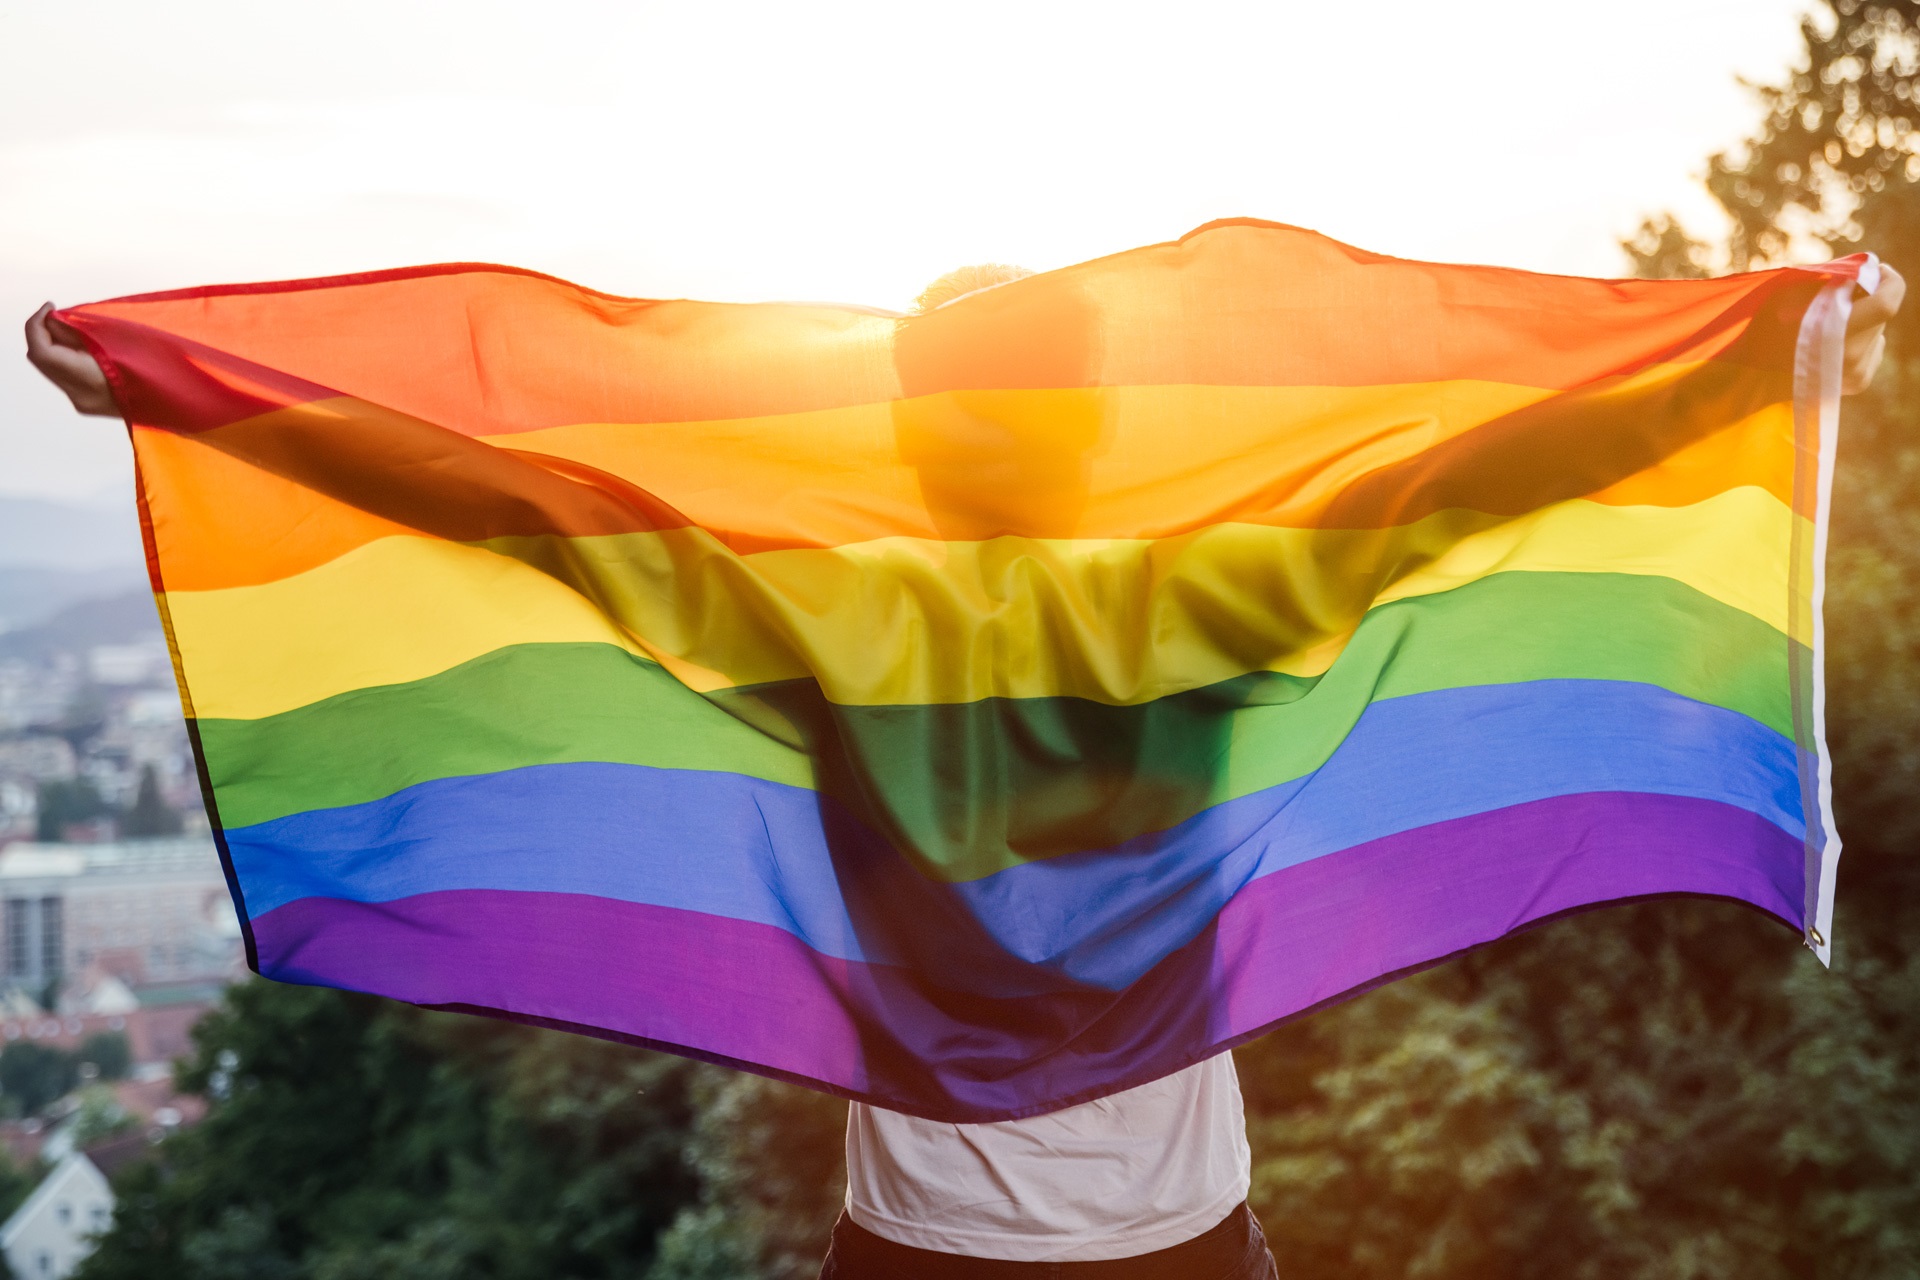 rainbow flag flies above a person